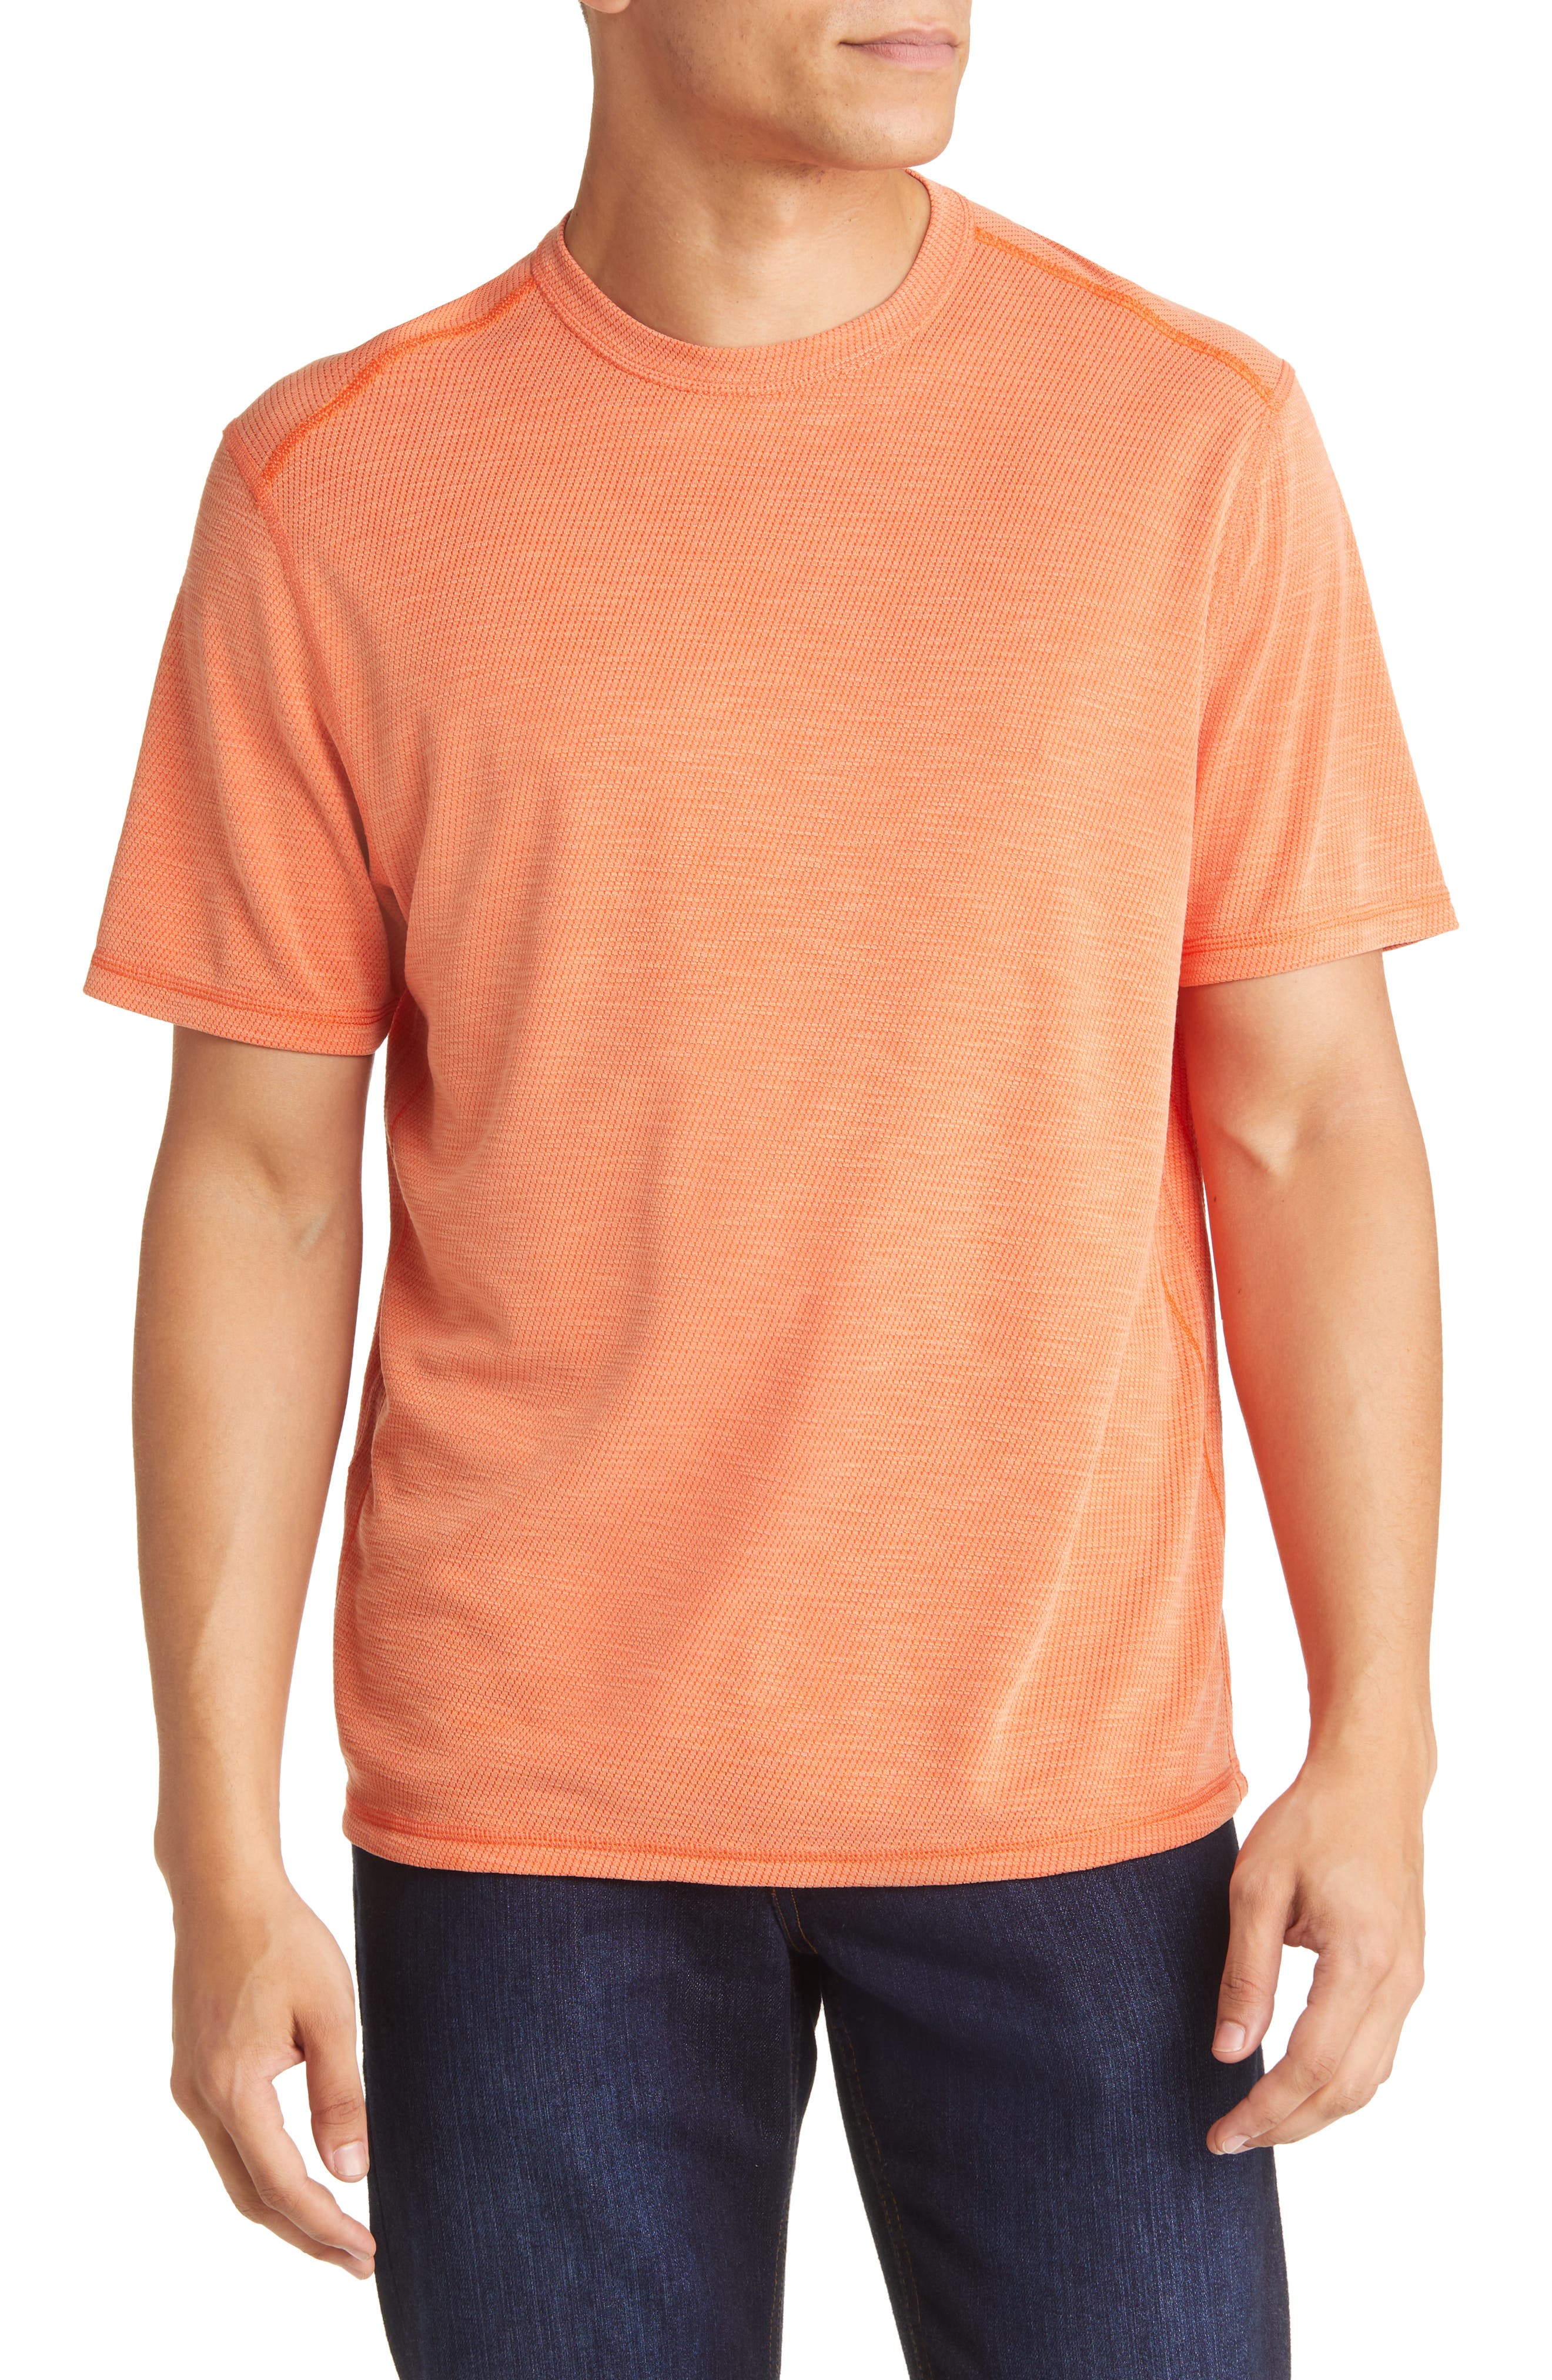 Sports Shirt neon orange athletic style Fashion Shirts Sports Shirts 